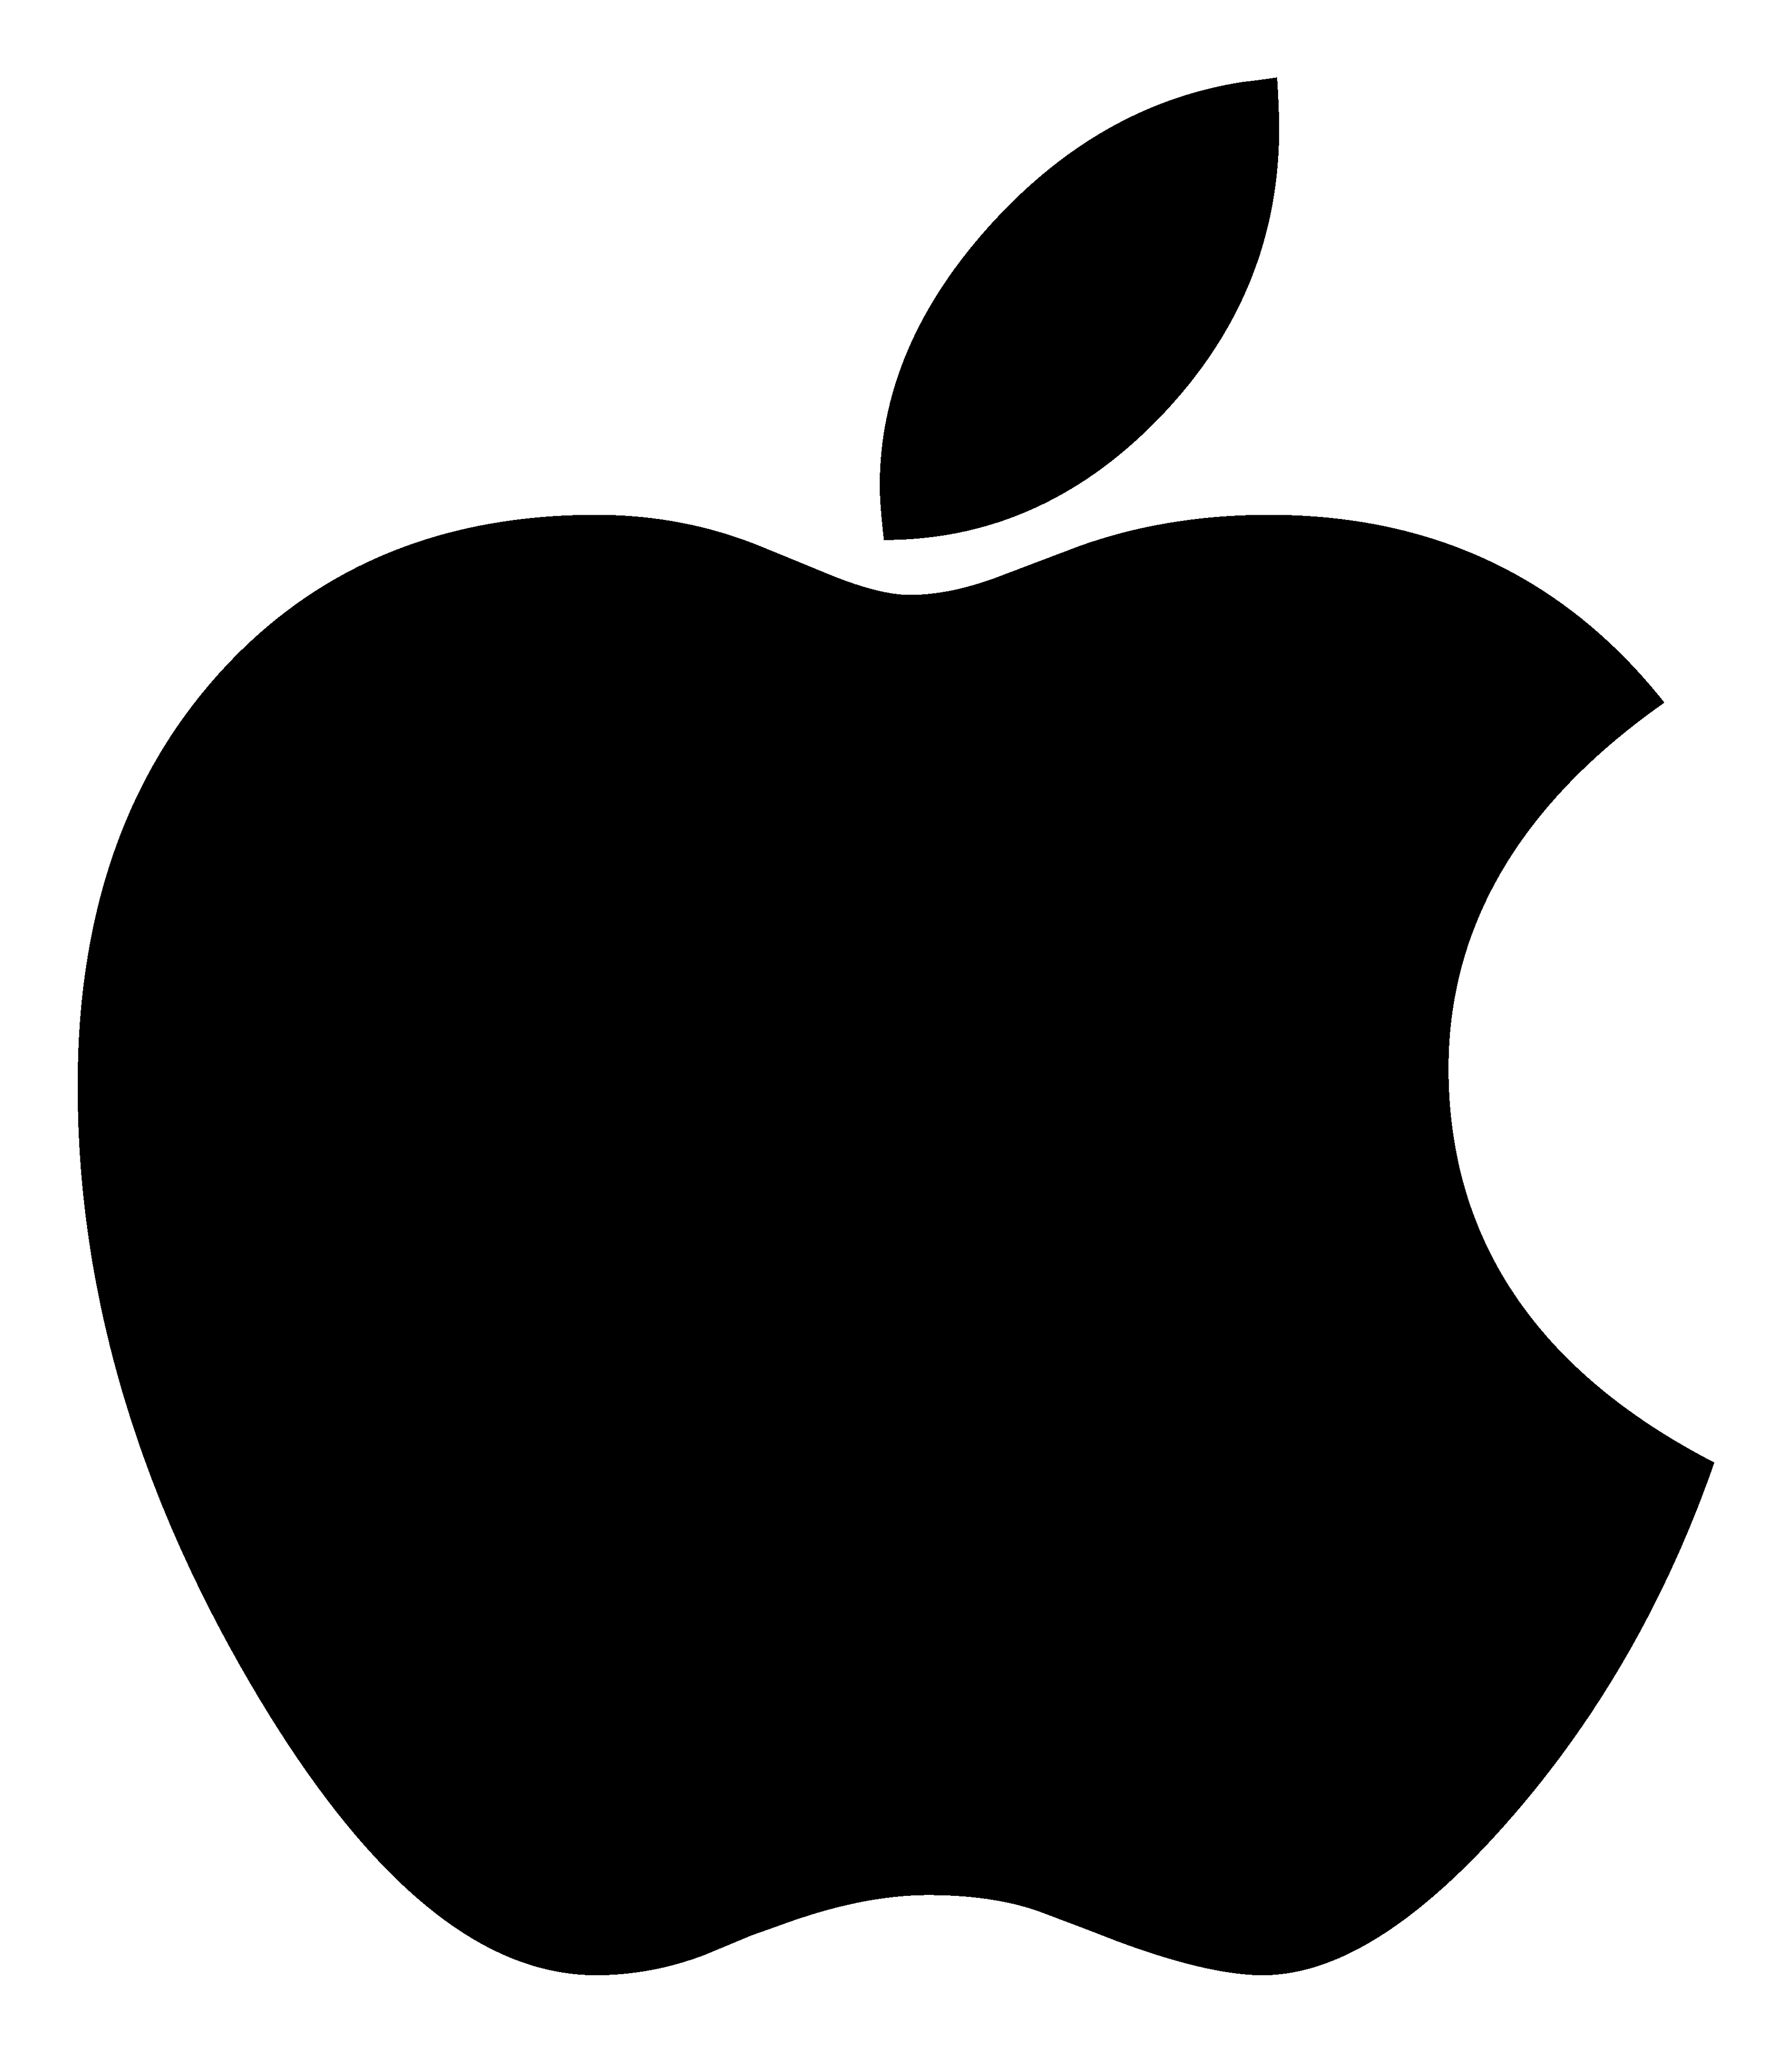 Macos Logo - Download Macos Apple Lion System Mac Operating Logo HQ PNG Image ...